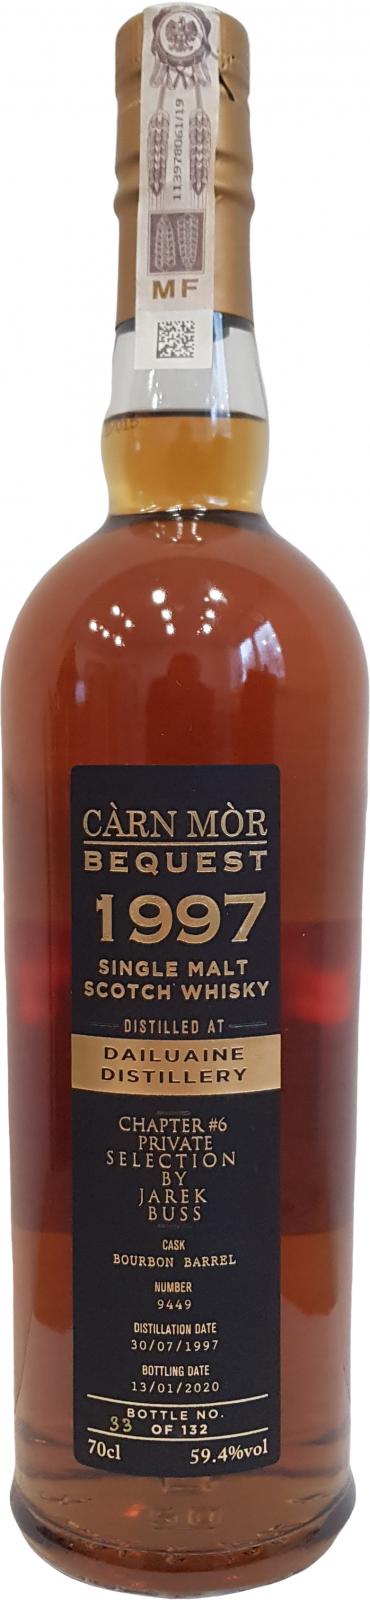 Dailuaine 1997 MMcK Carn Mor Bequest Bourbon Barrel #9449 59.4% 700ml